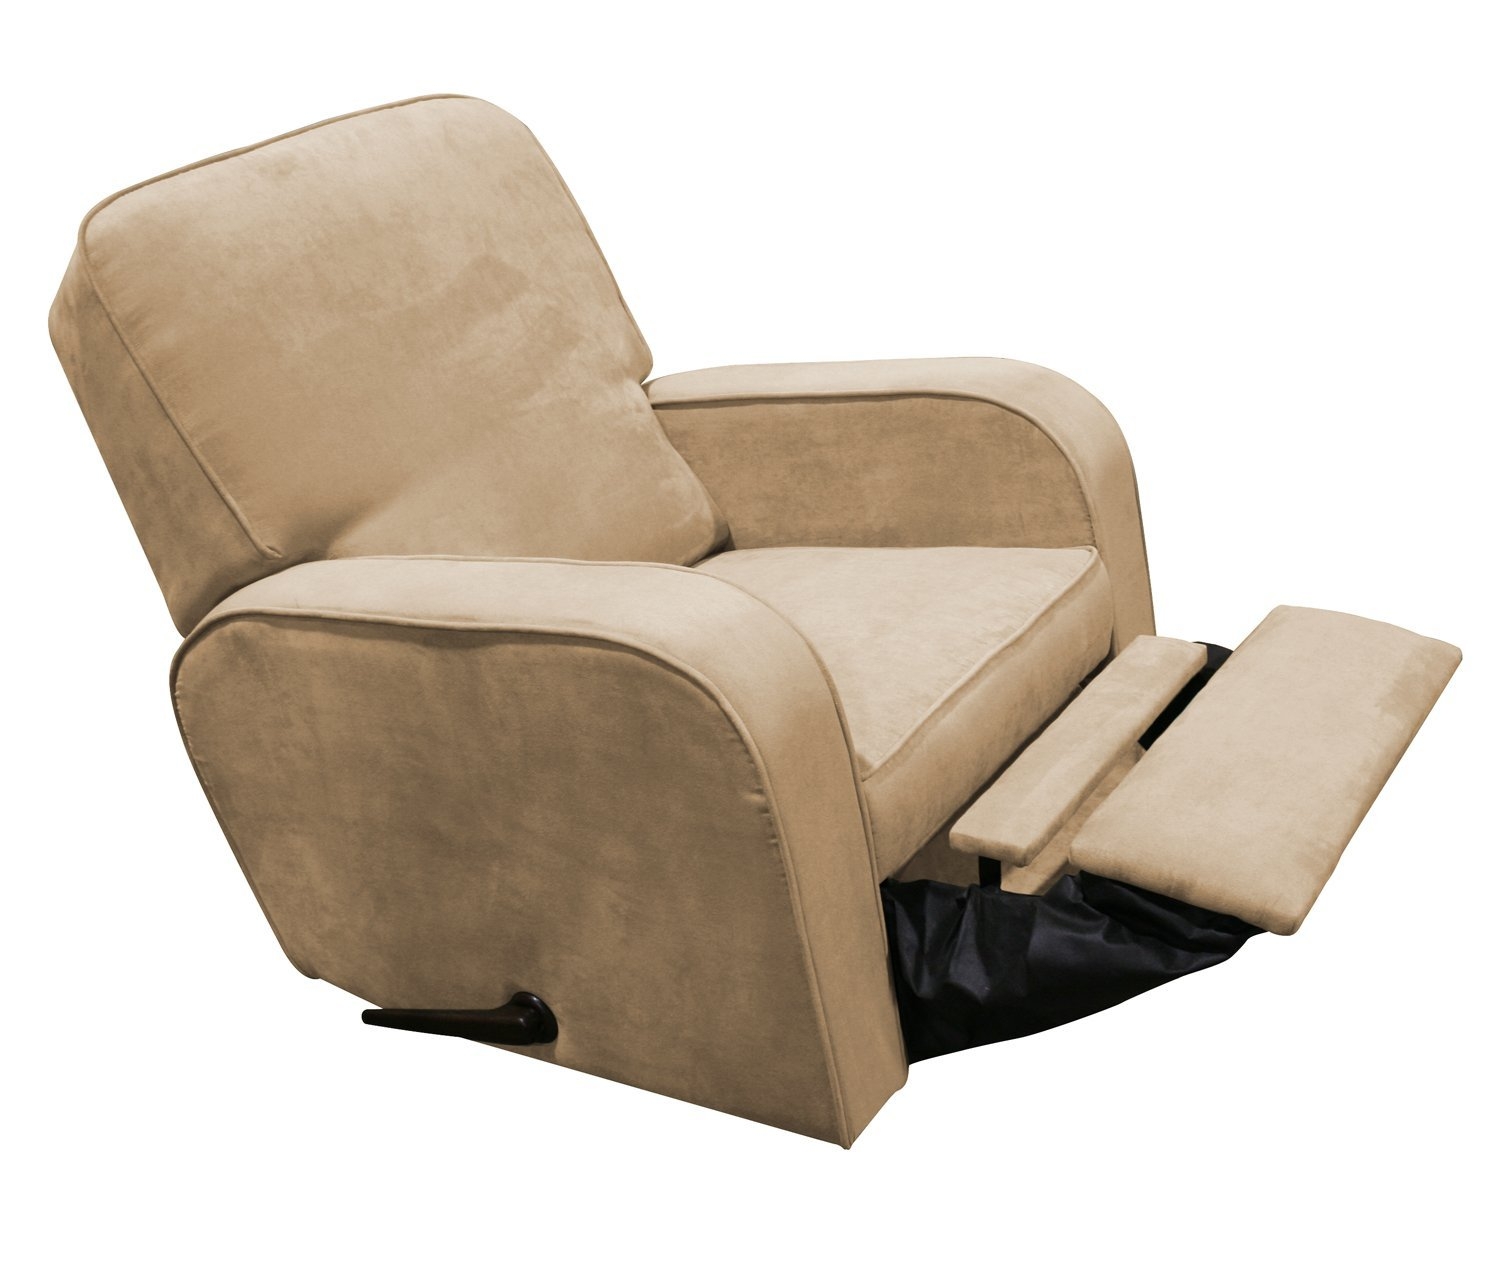 Ergonomic lounge furniture